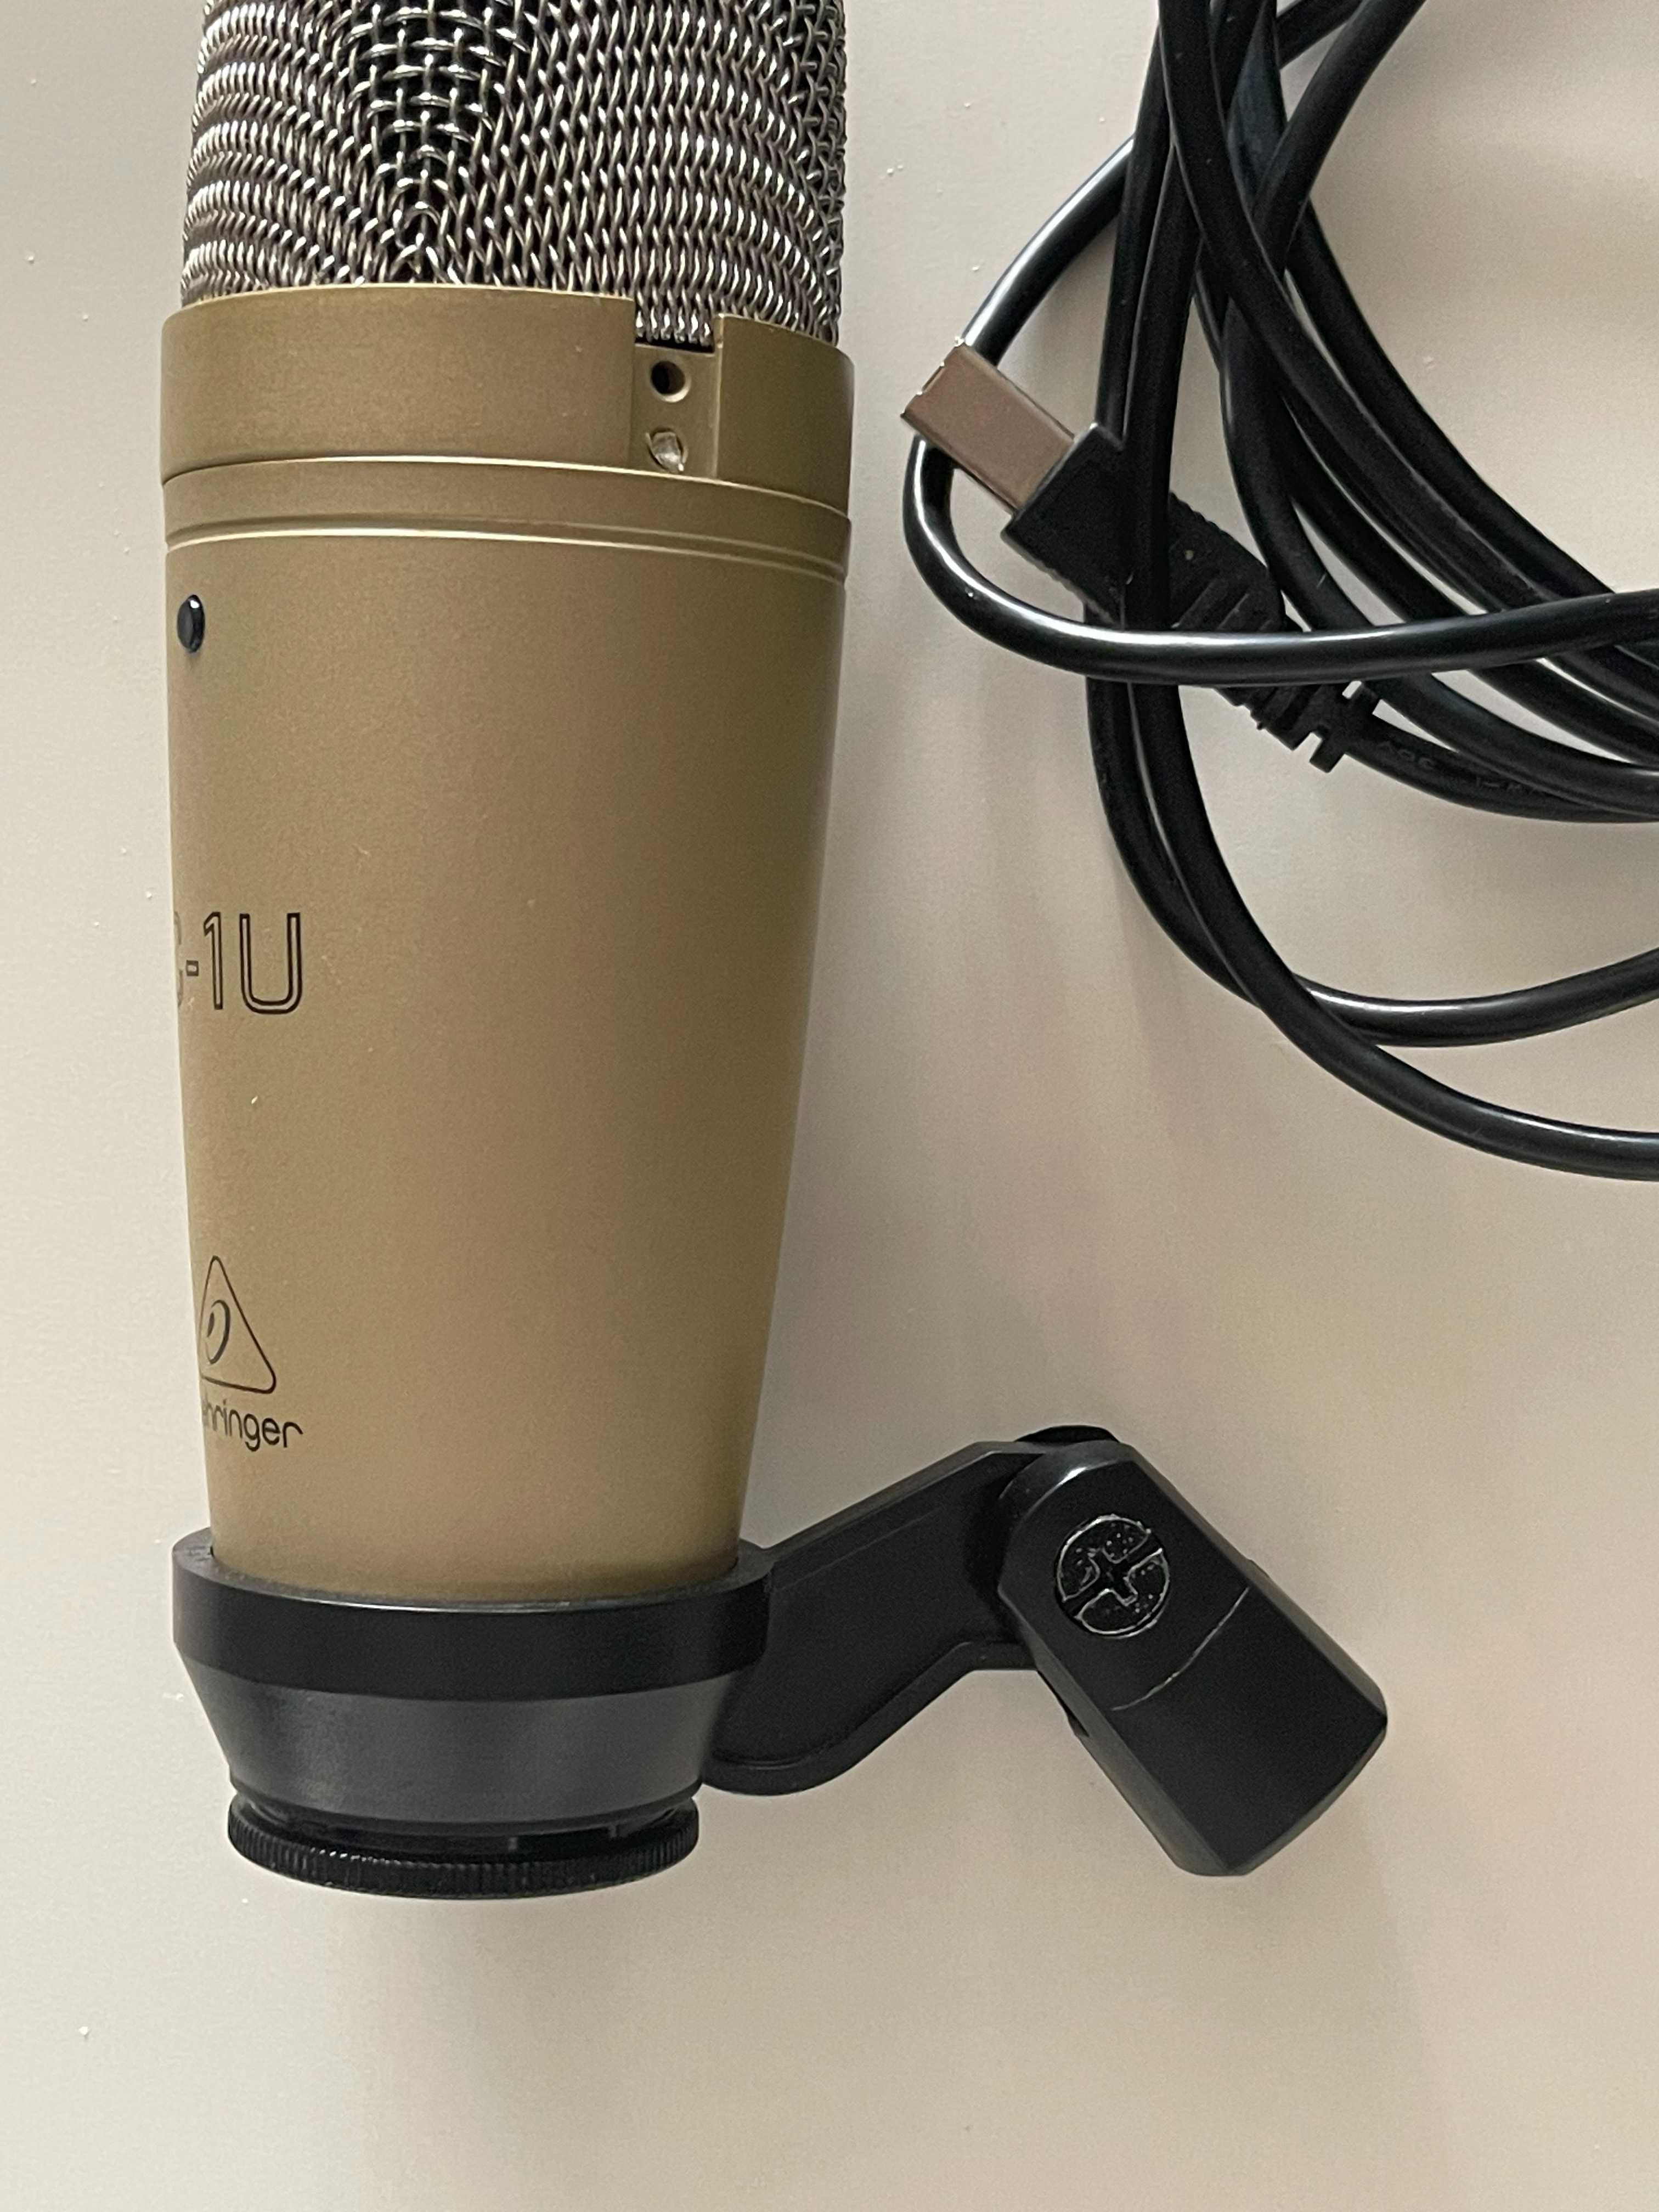 Microfon Studio USB Behringer C-1U (Condenser)